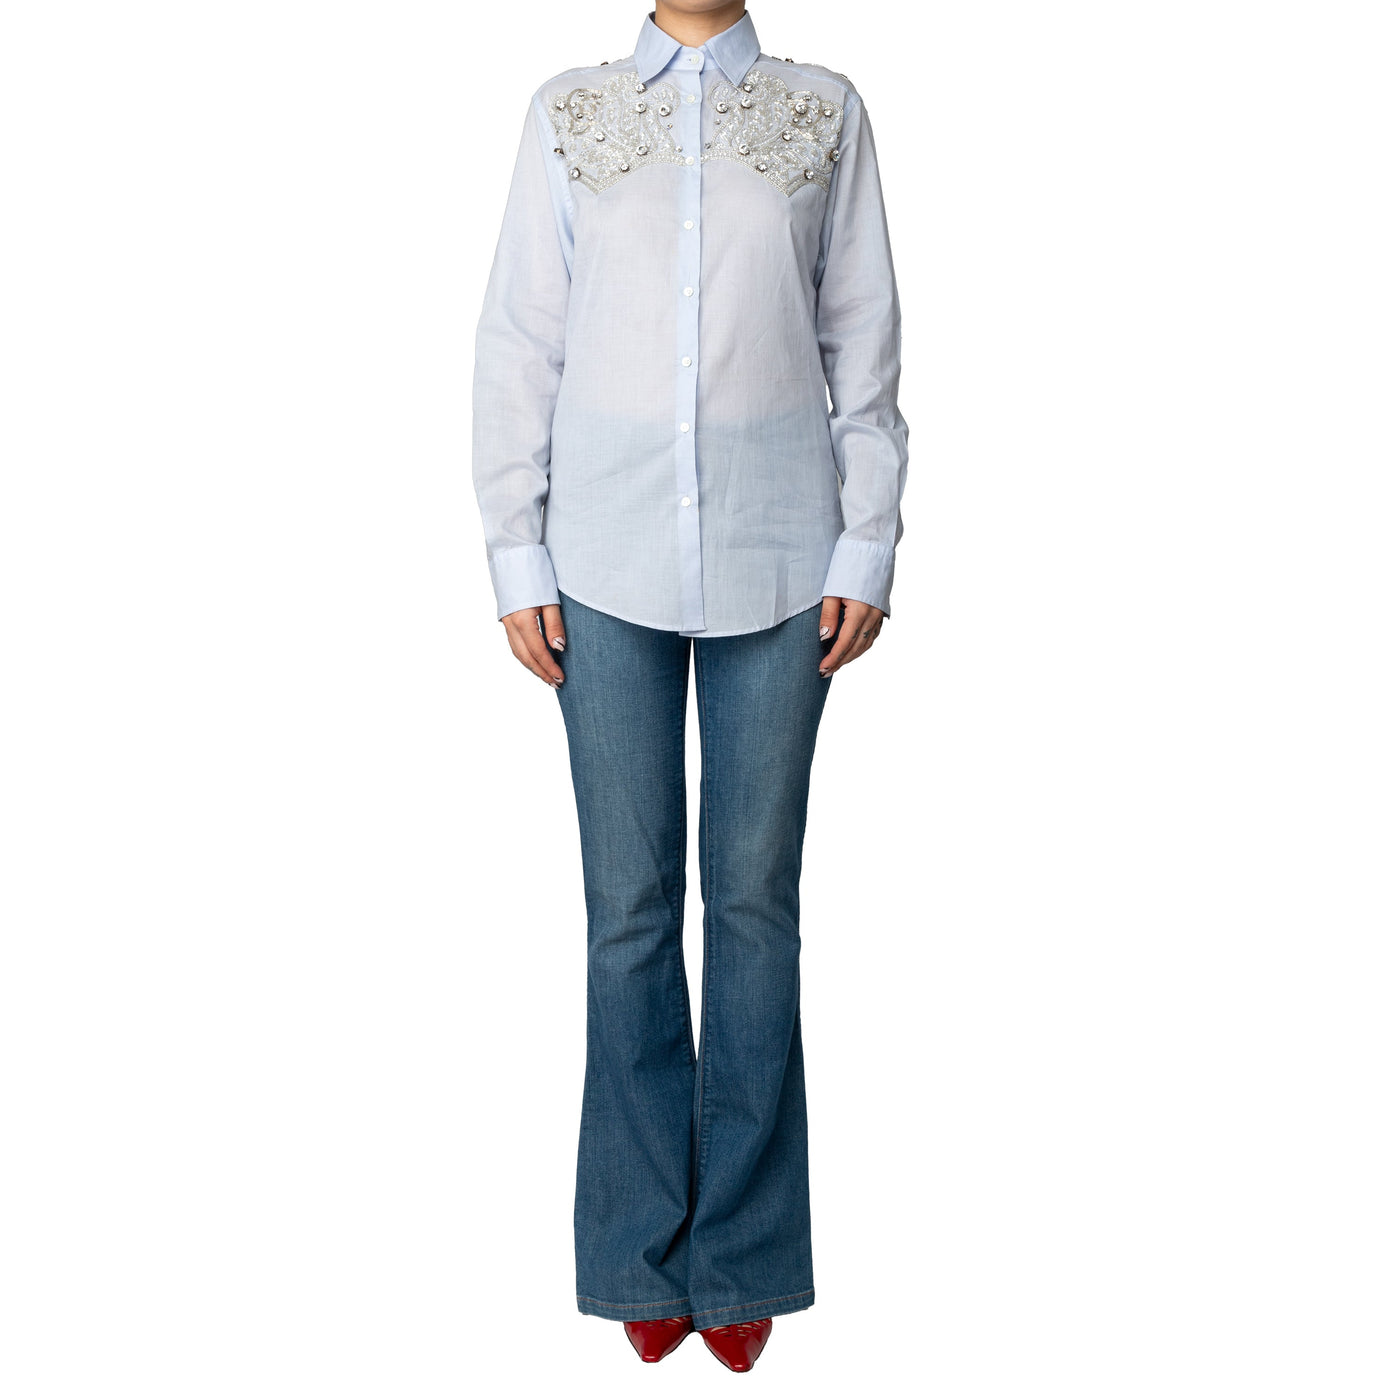 Roberto Cavalli Crystal Embellished Shirt - '00s